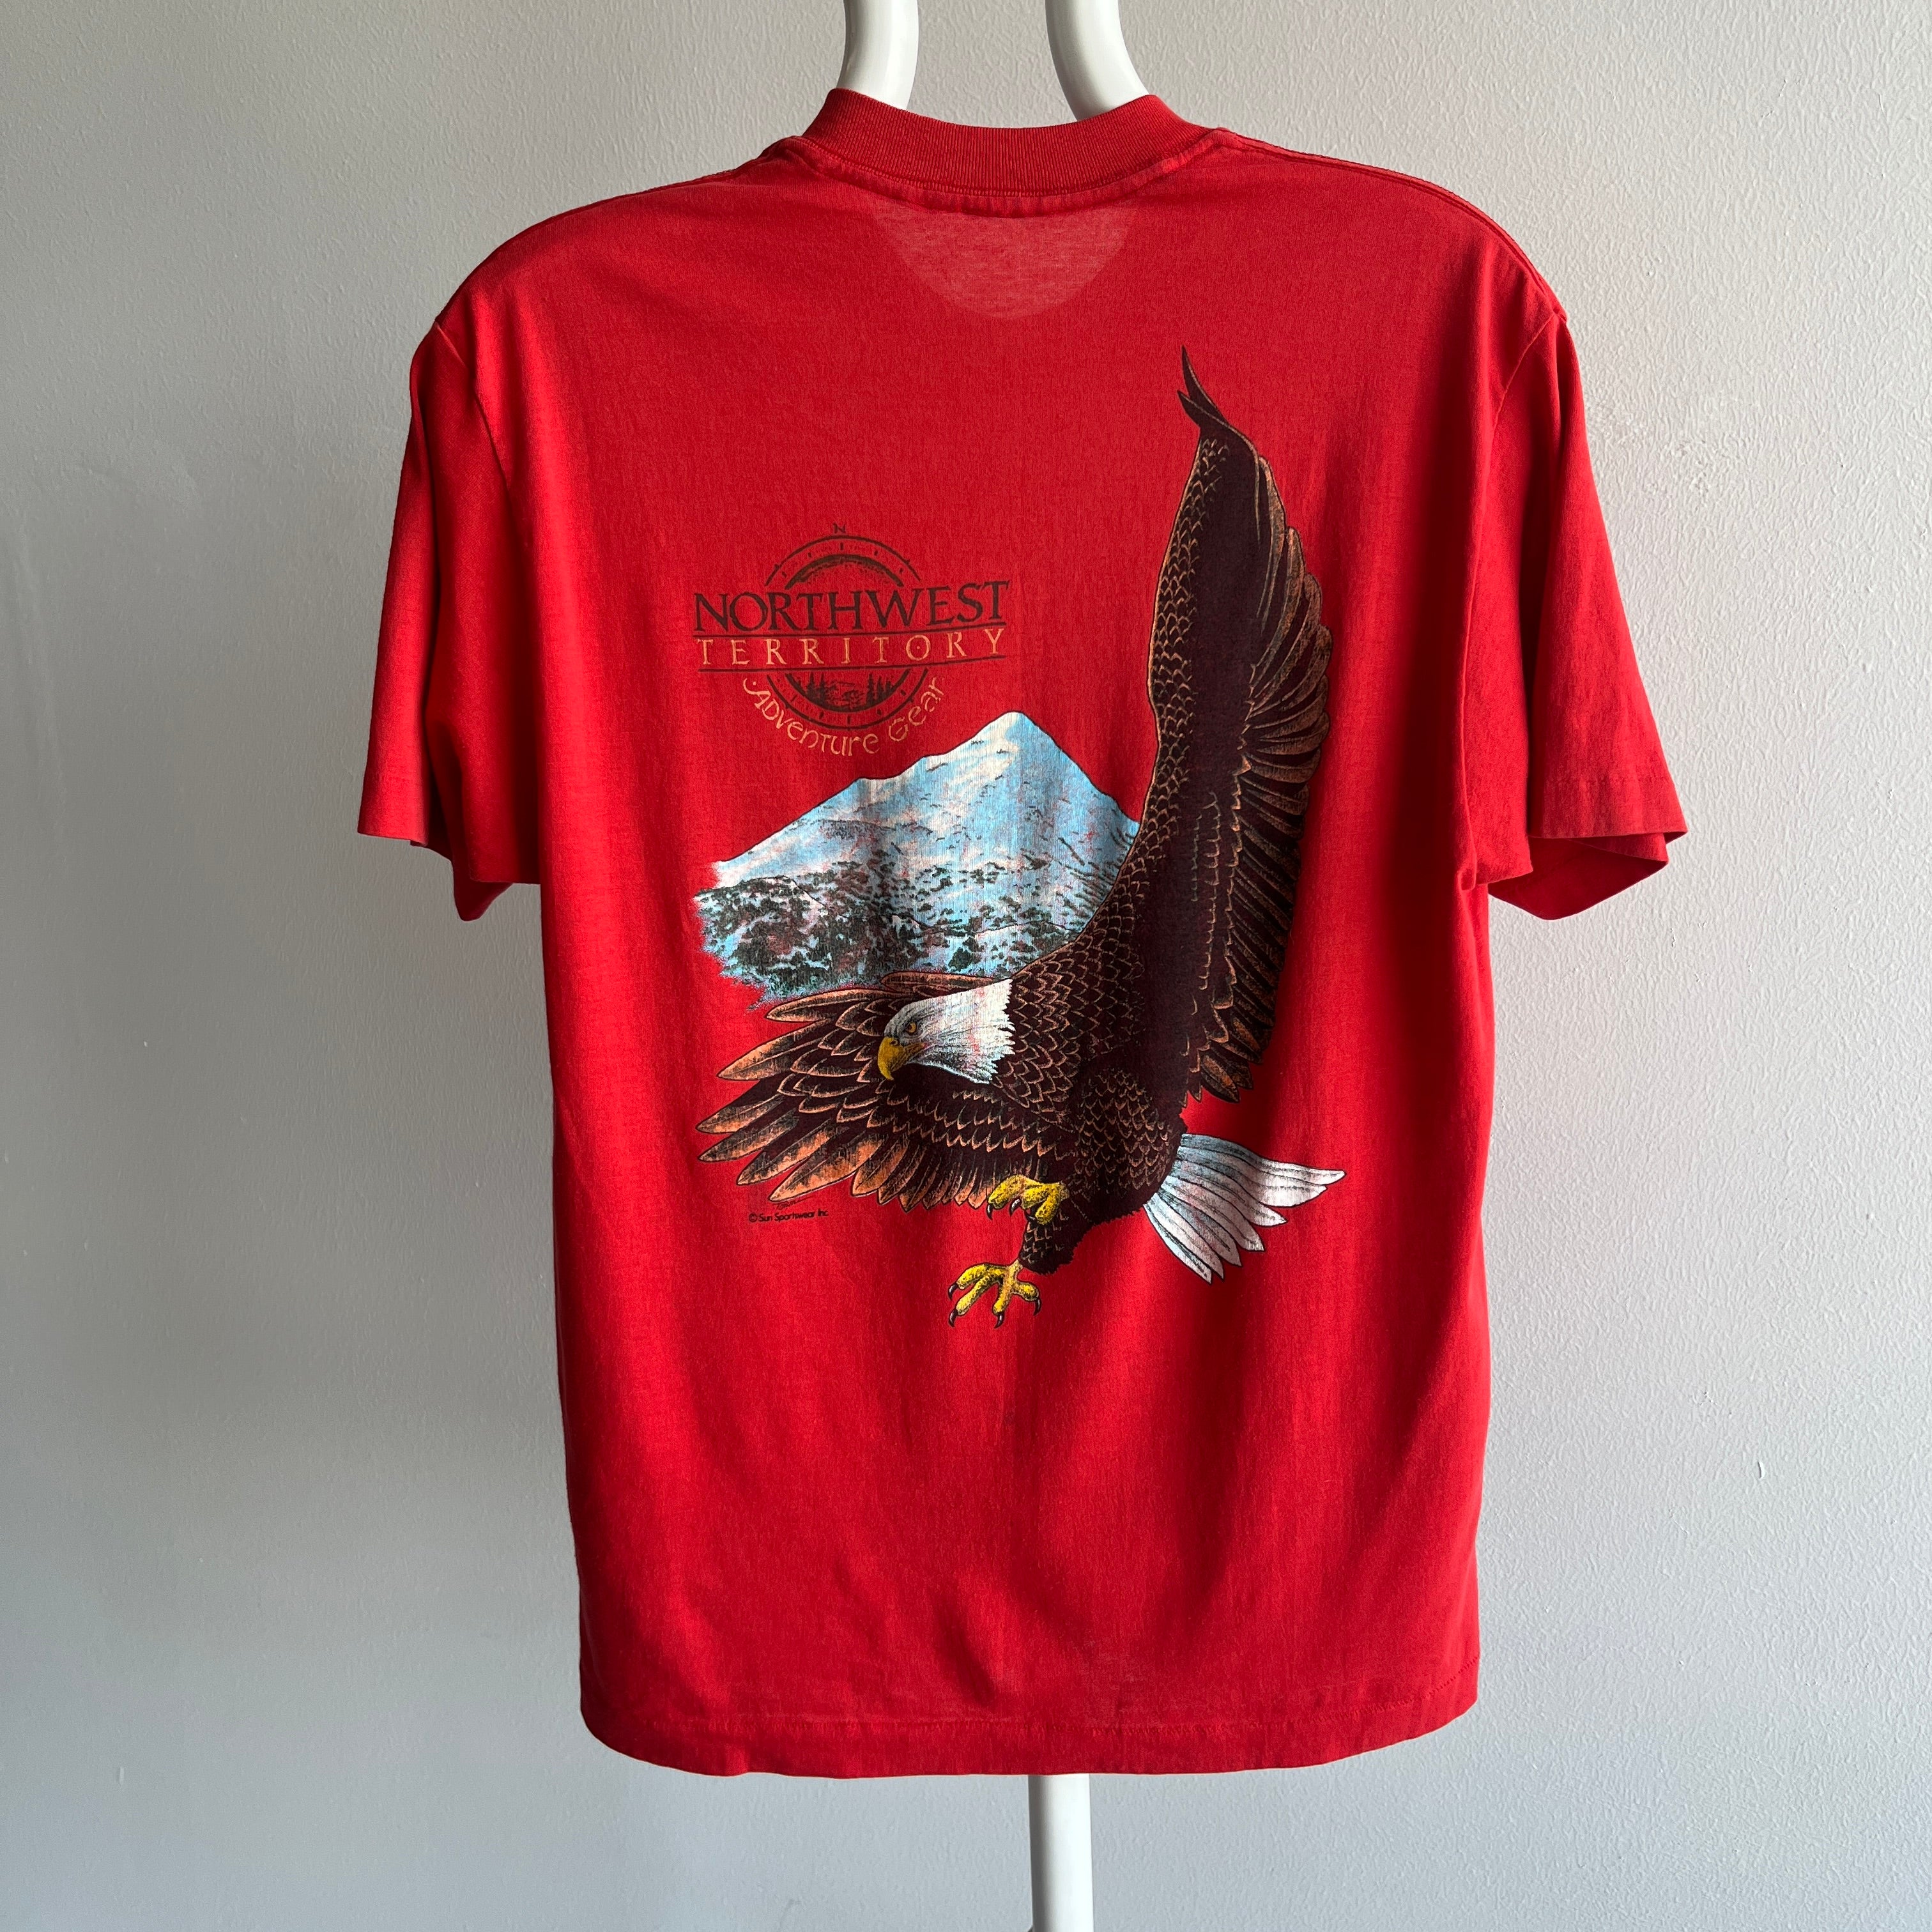 1980s !!! THE BACKSIDE !! Northwest Territory Adventure Gear Pocket T-Shirt